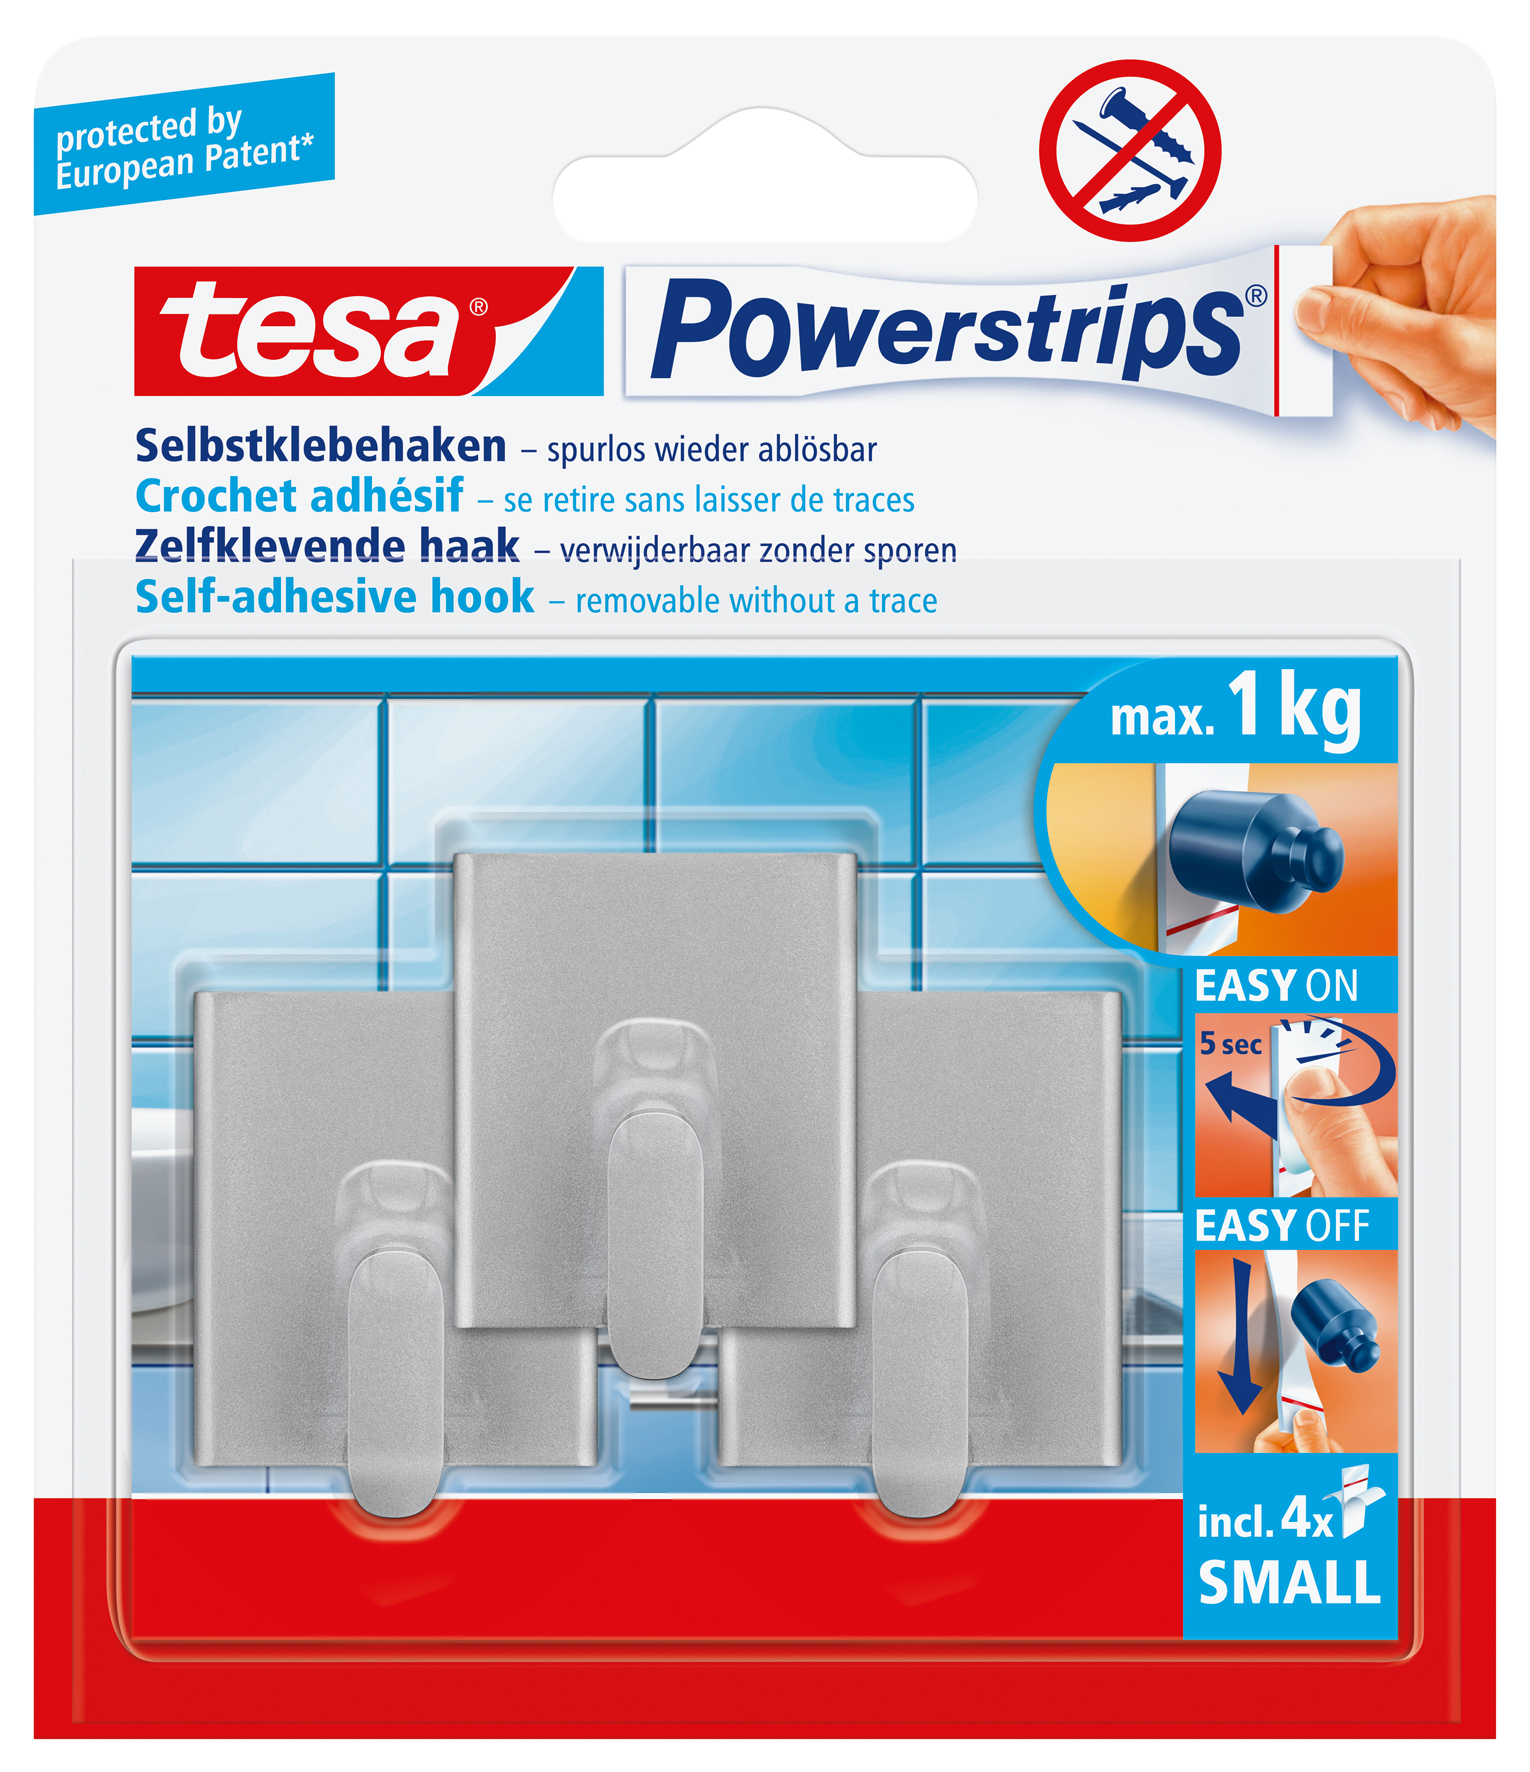 TESA SE Tesa Powerstrips Haken Small Rechteck